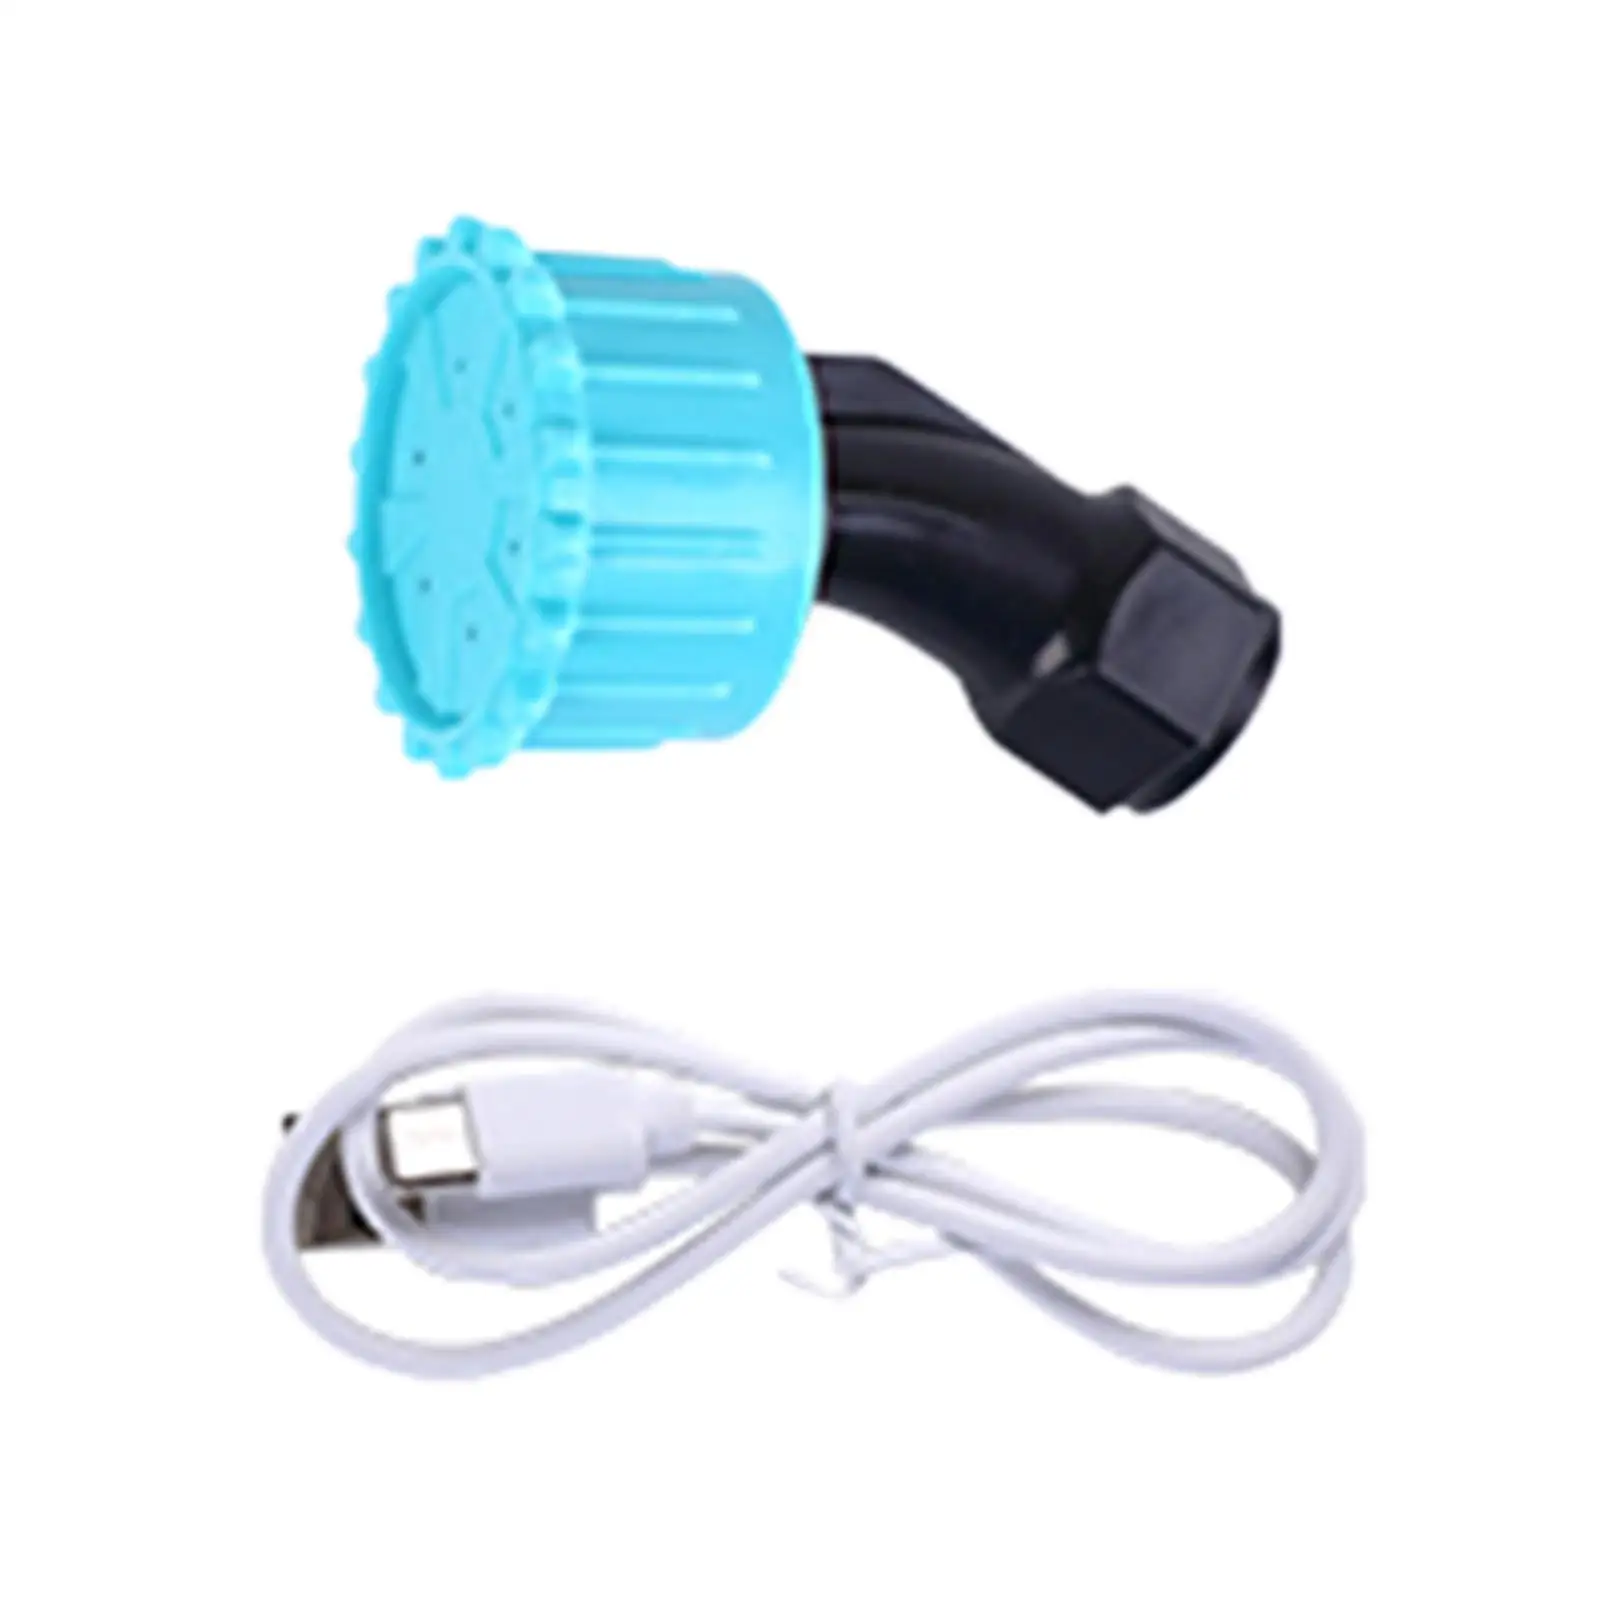 Garden Sprayer Gun Telescopic Water Spray Adjustable USB Charging Accessories for Household Home Cleaning Spraying